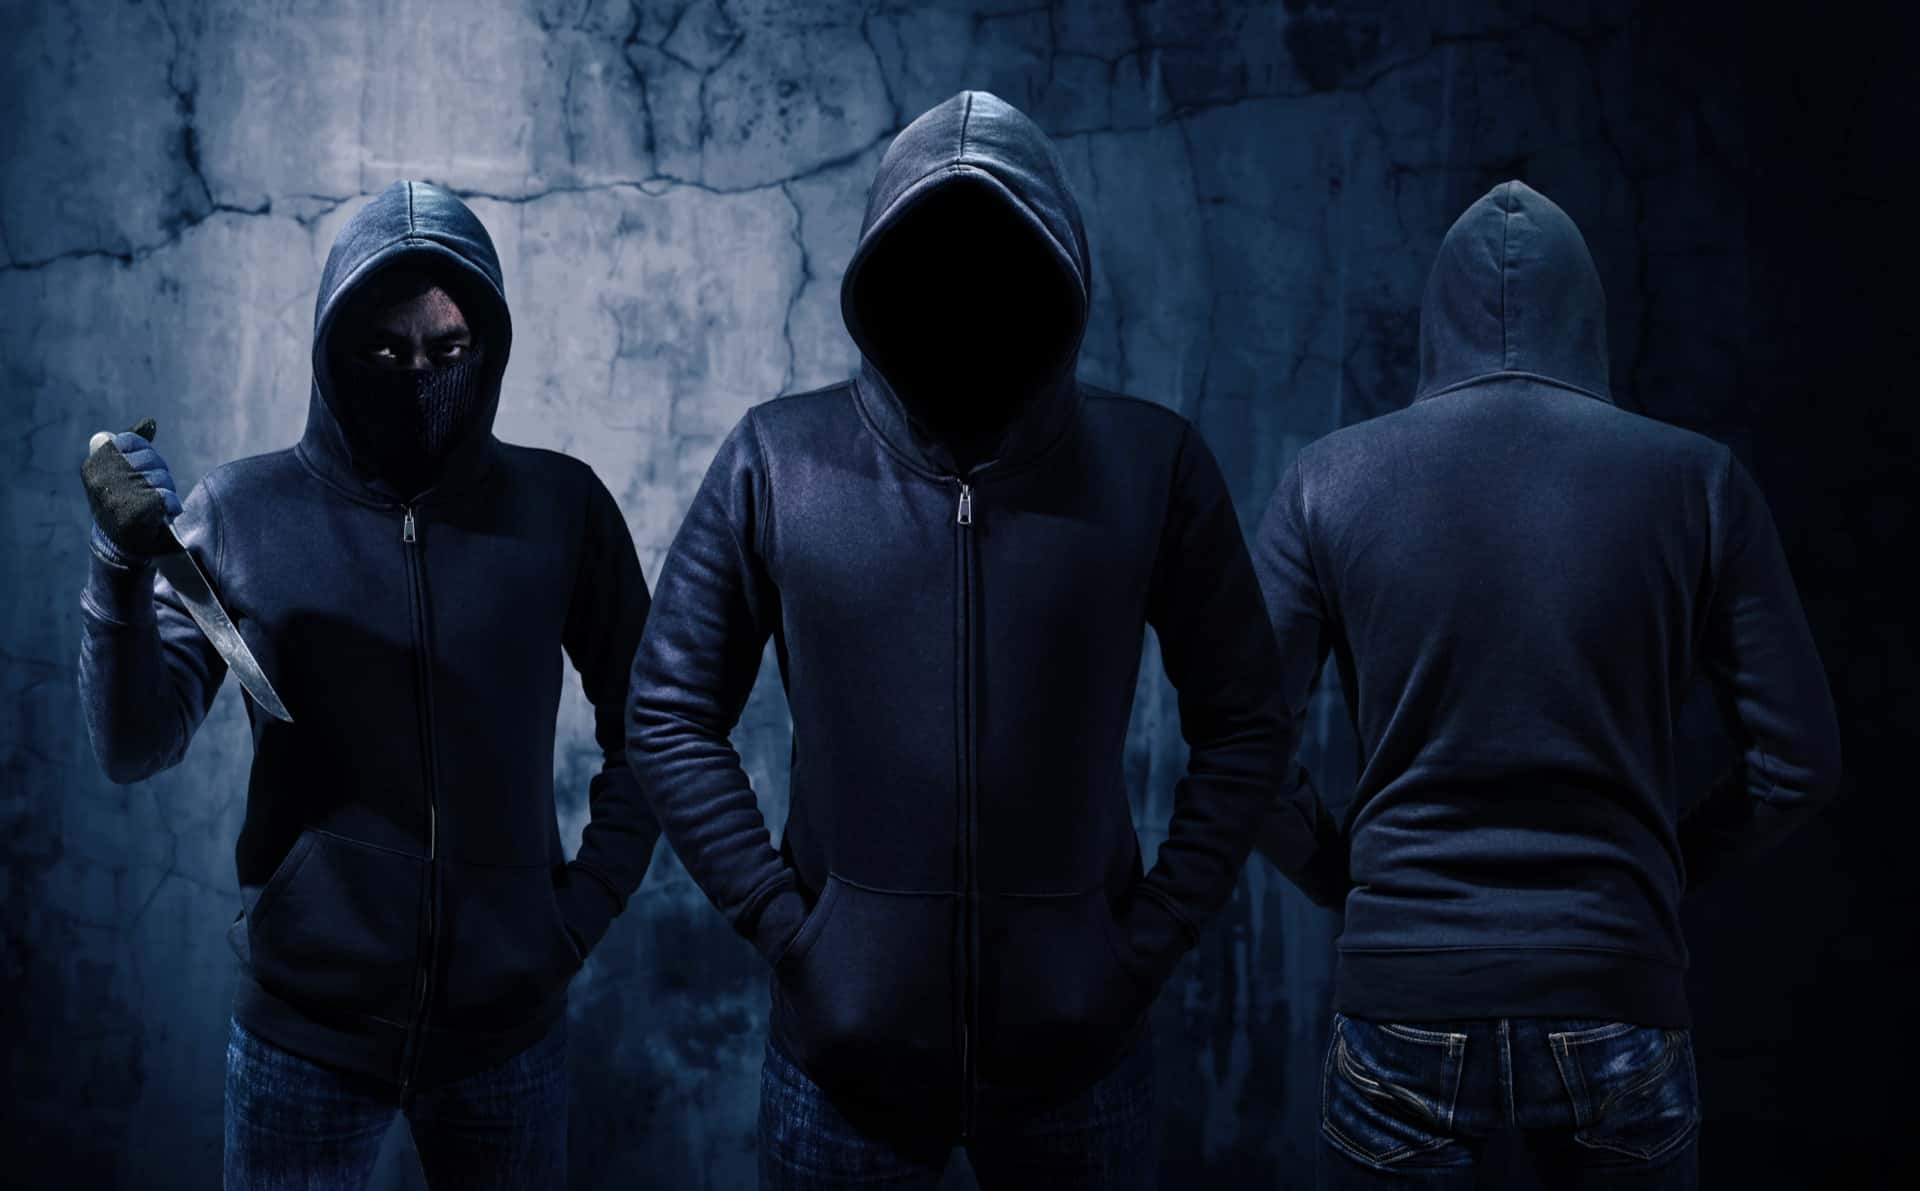 Gang of Robbers or Burglars Dressed in Black | Violent Crimes Lawyers in LA​​ | Wegman & Levin